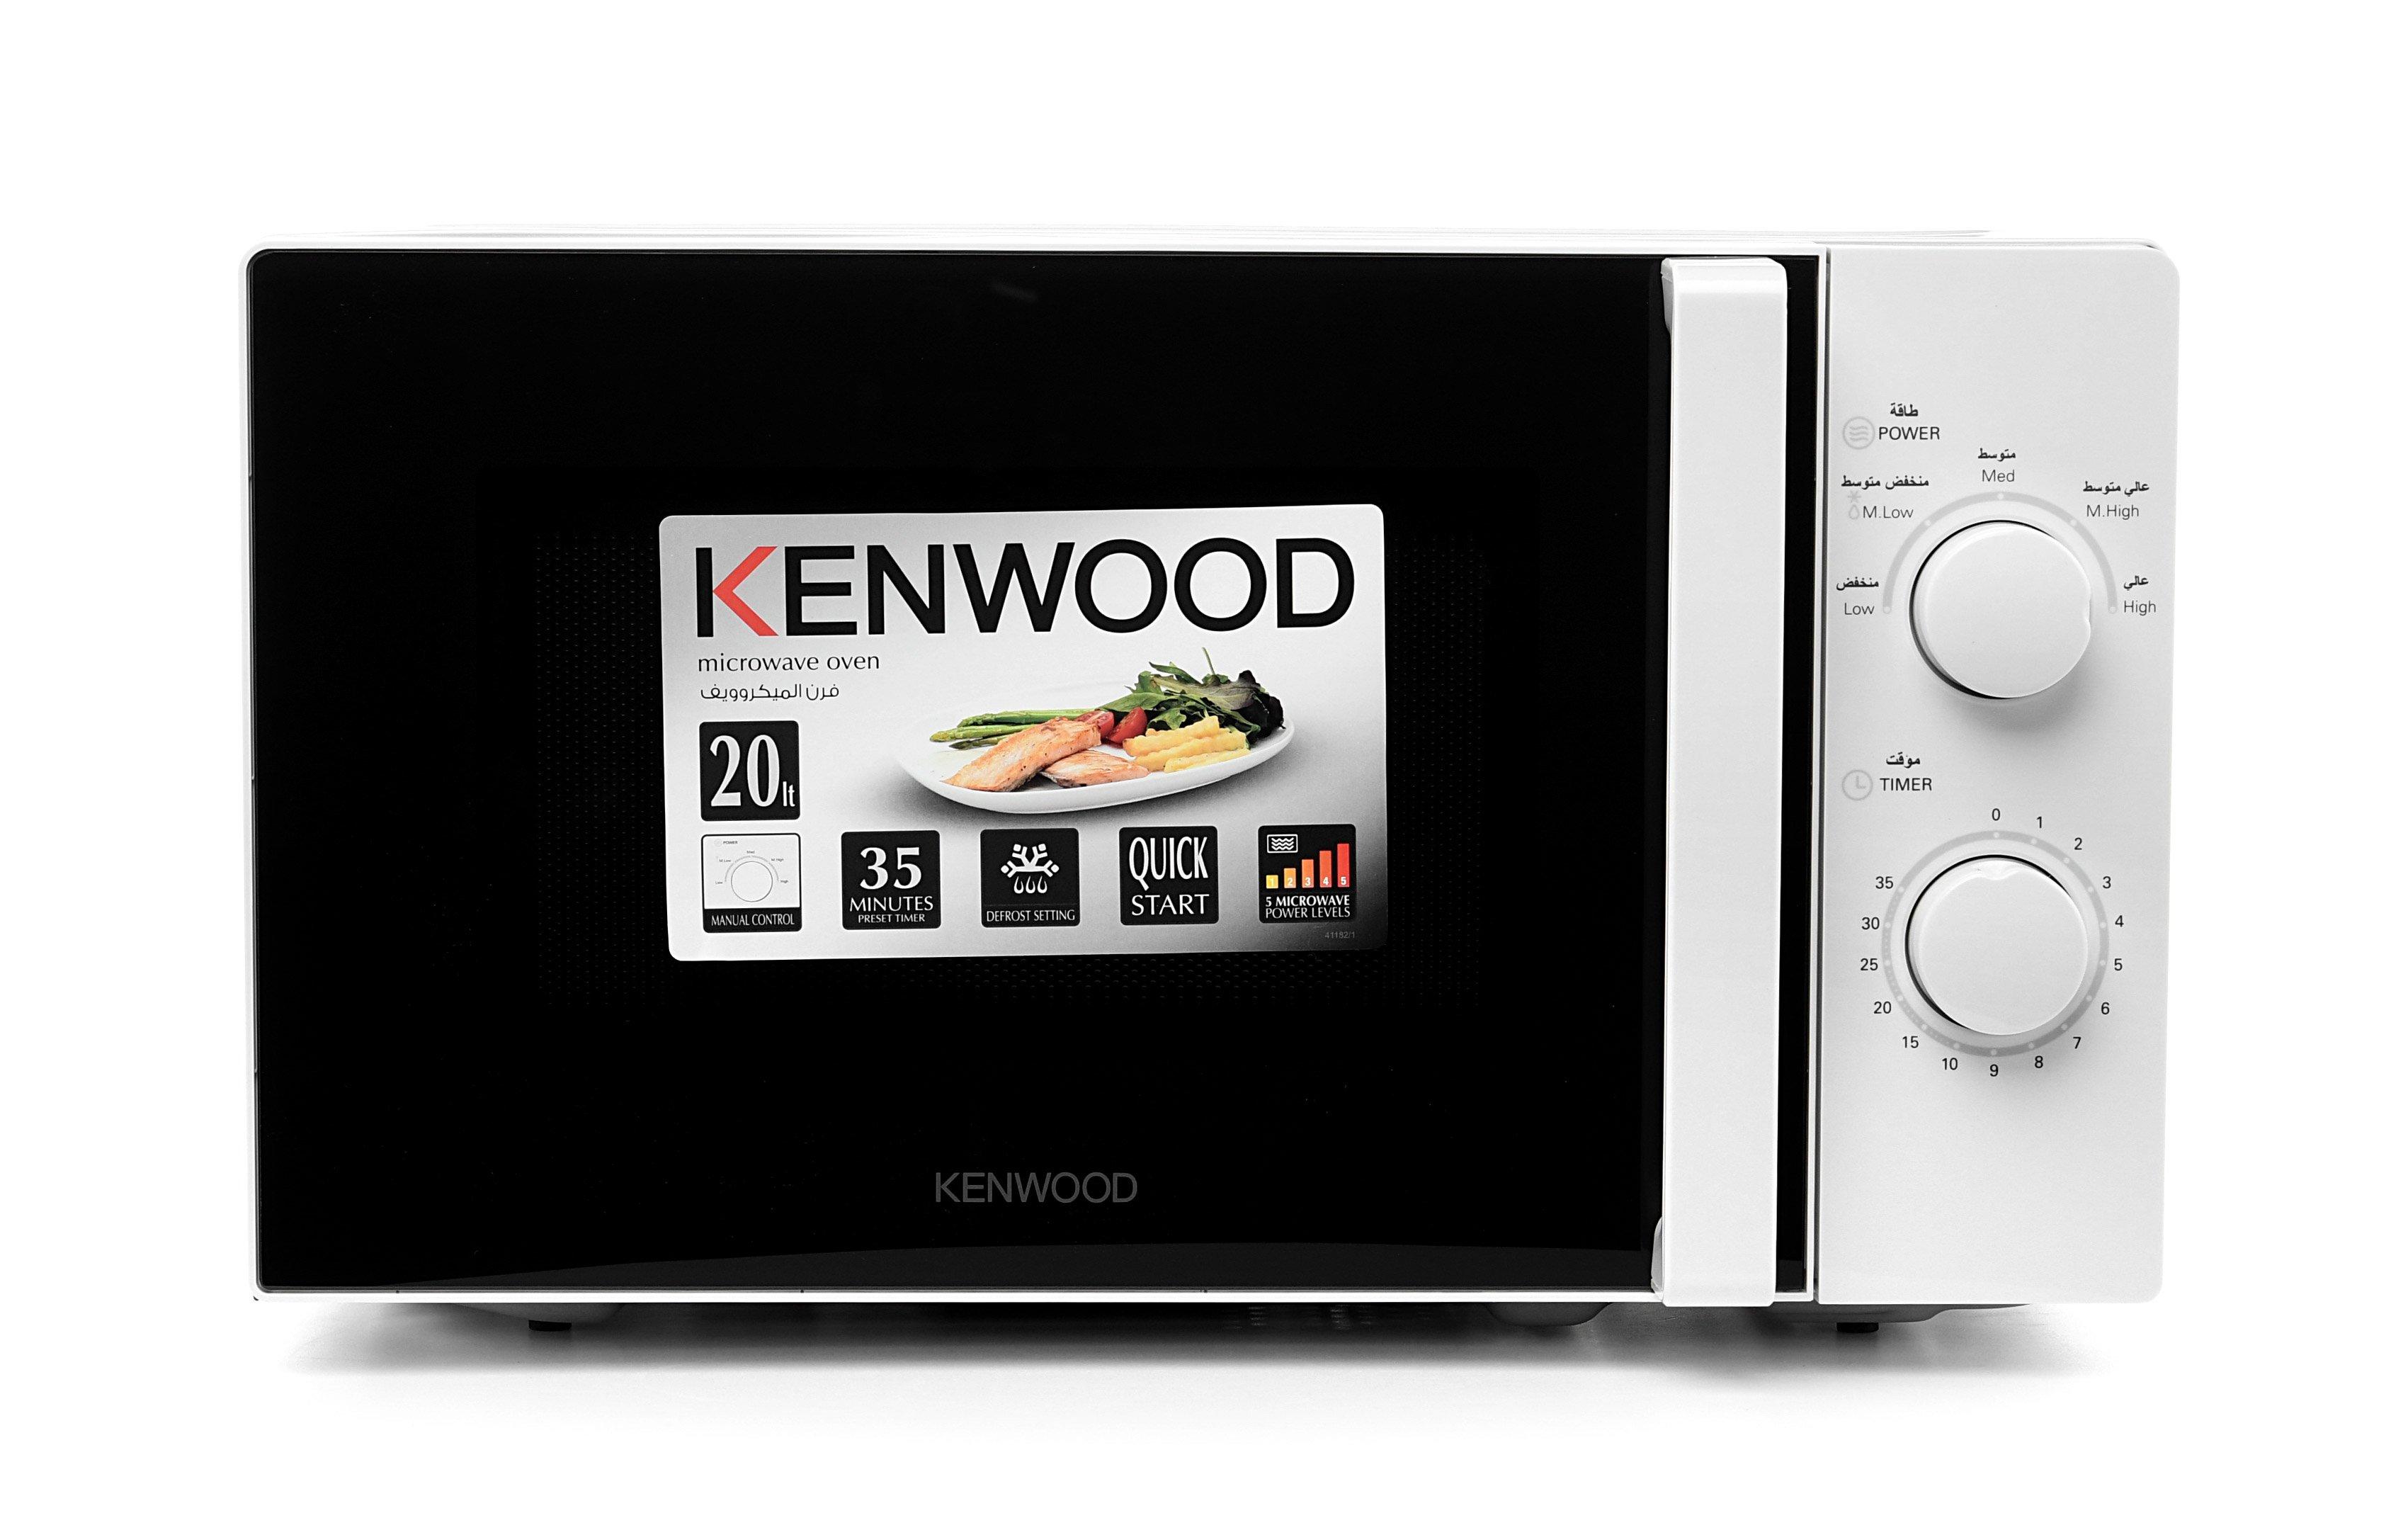 https://media.extra.com/s/aurora/00171156_800/Kenwood-Microwave-Oven-20L-White?locale=en-GB,en-*,*